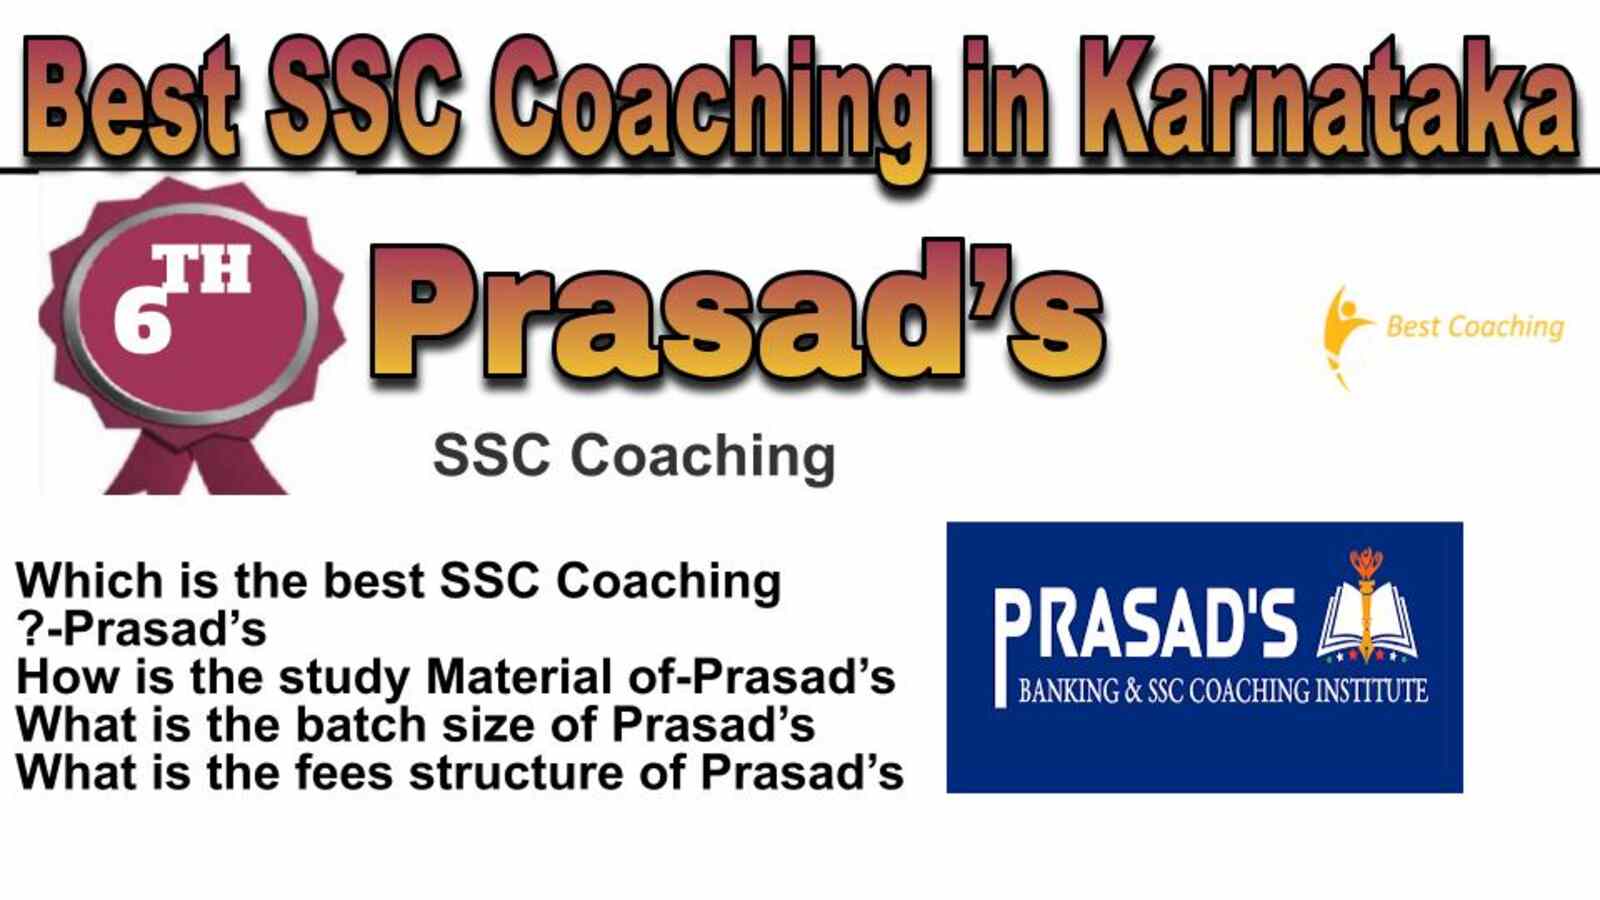 Rank 6 best SSC coaching in Karnataka